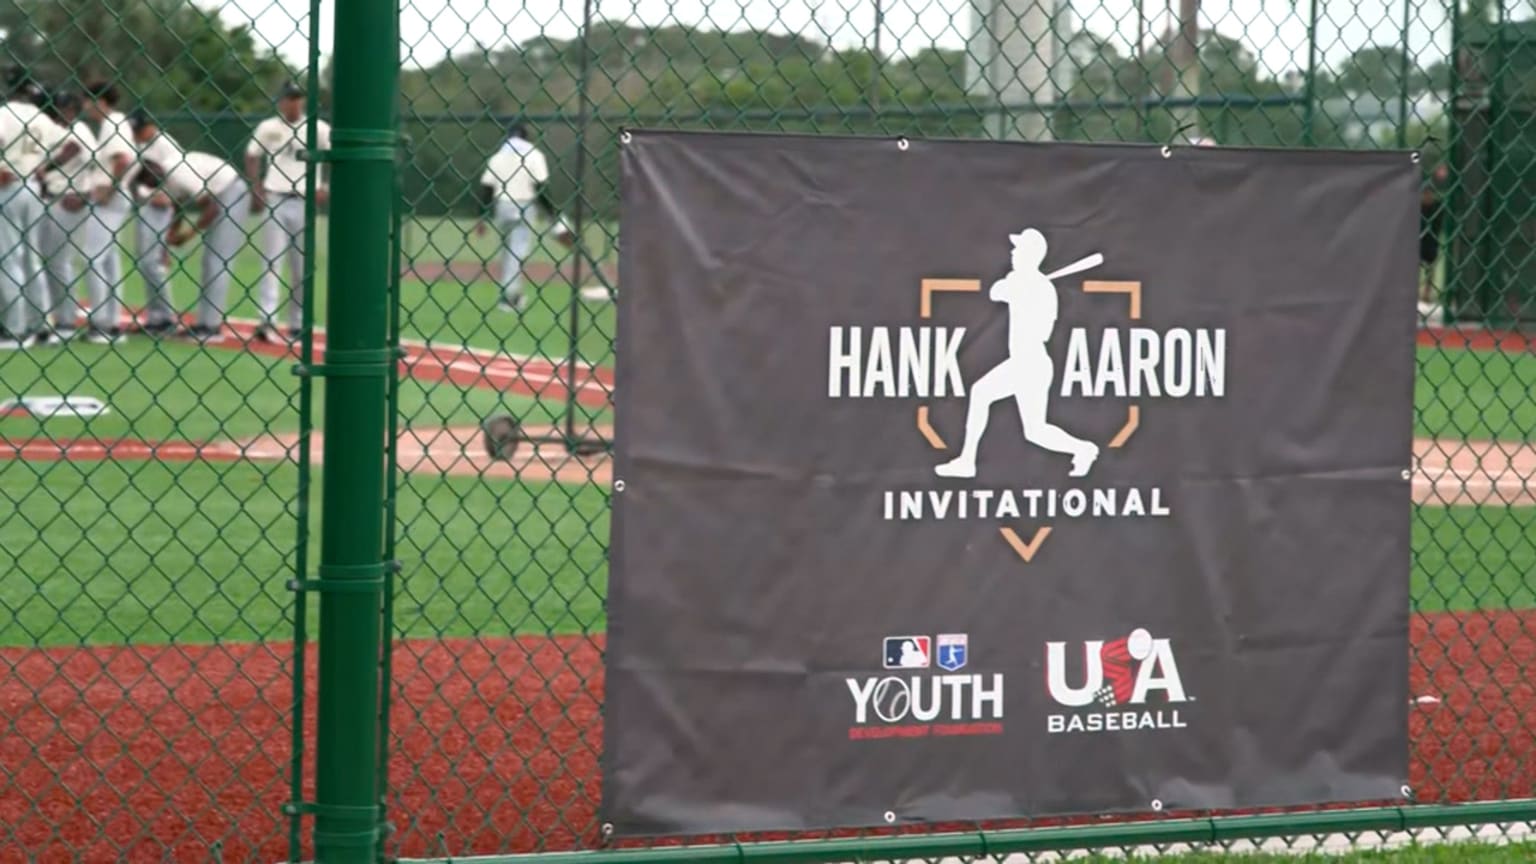 MLB Held Its Third Annual Hank Aaron Invitational Last Weekend